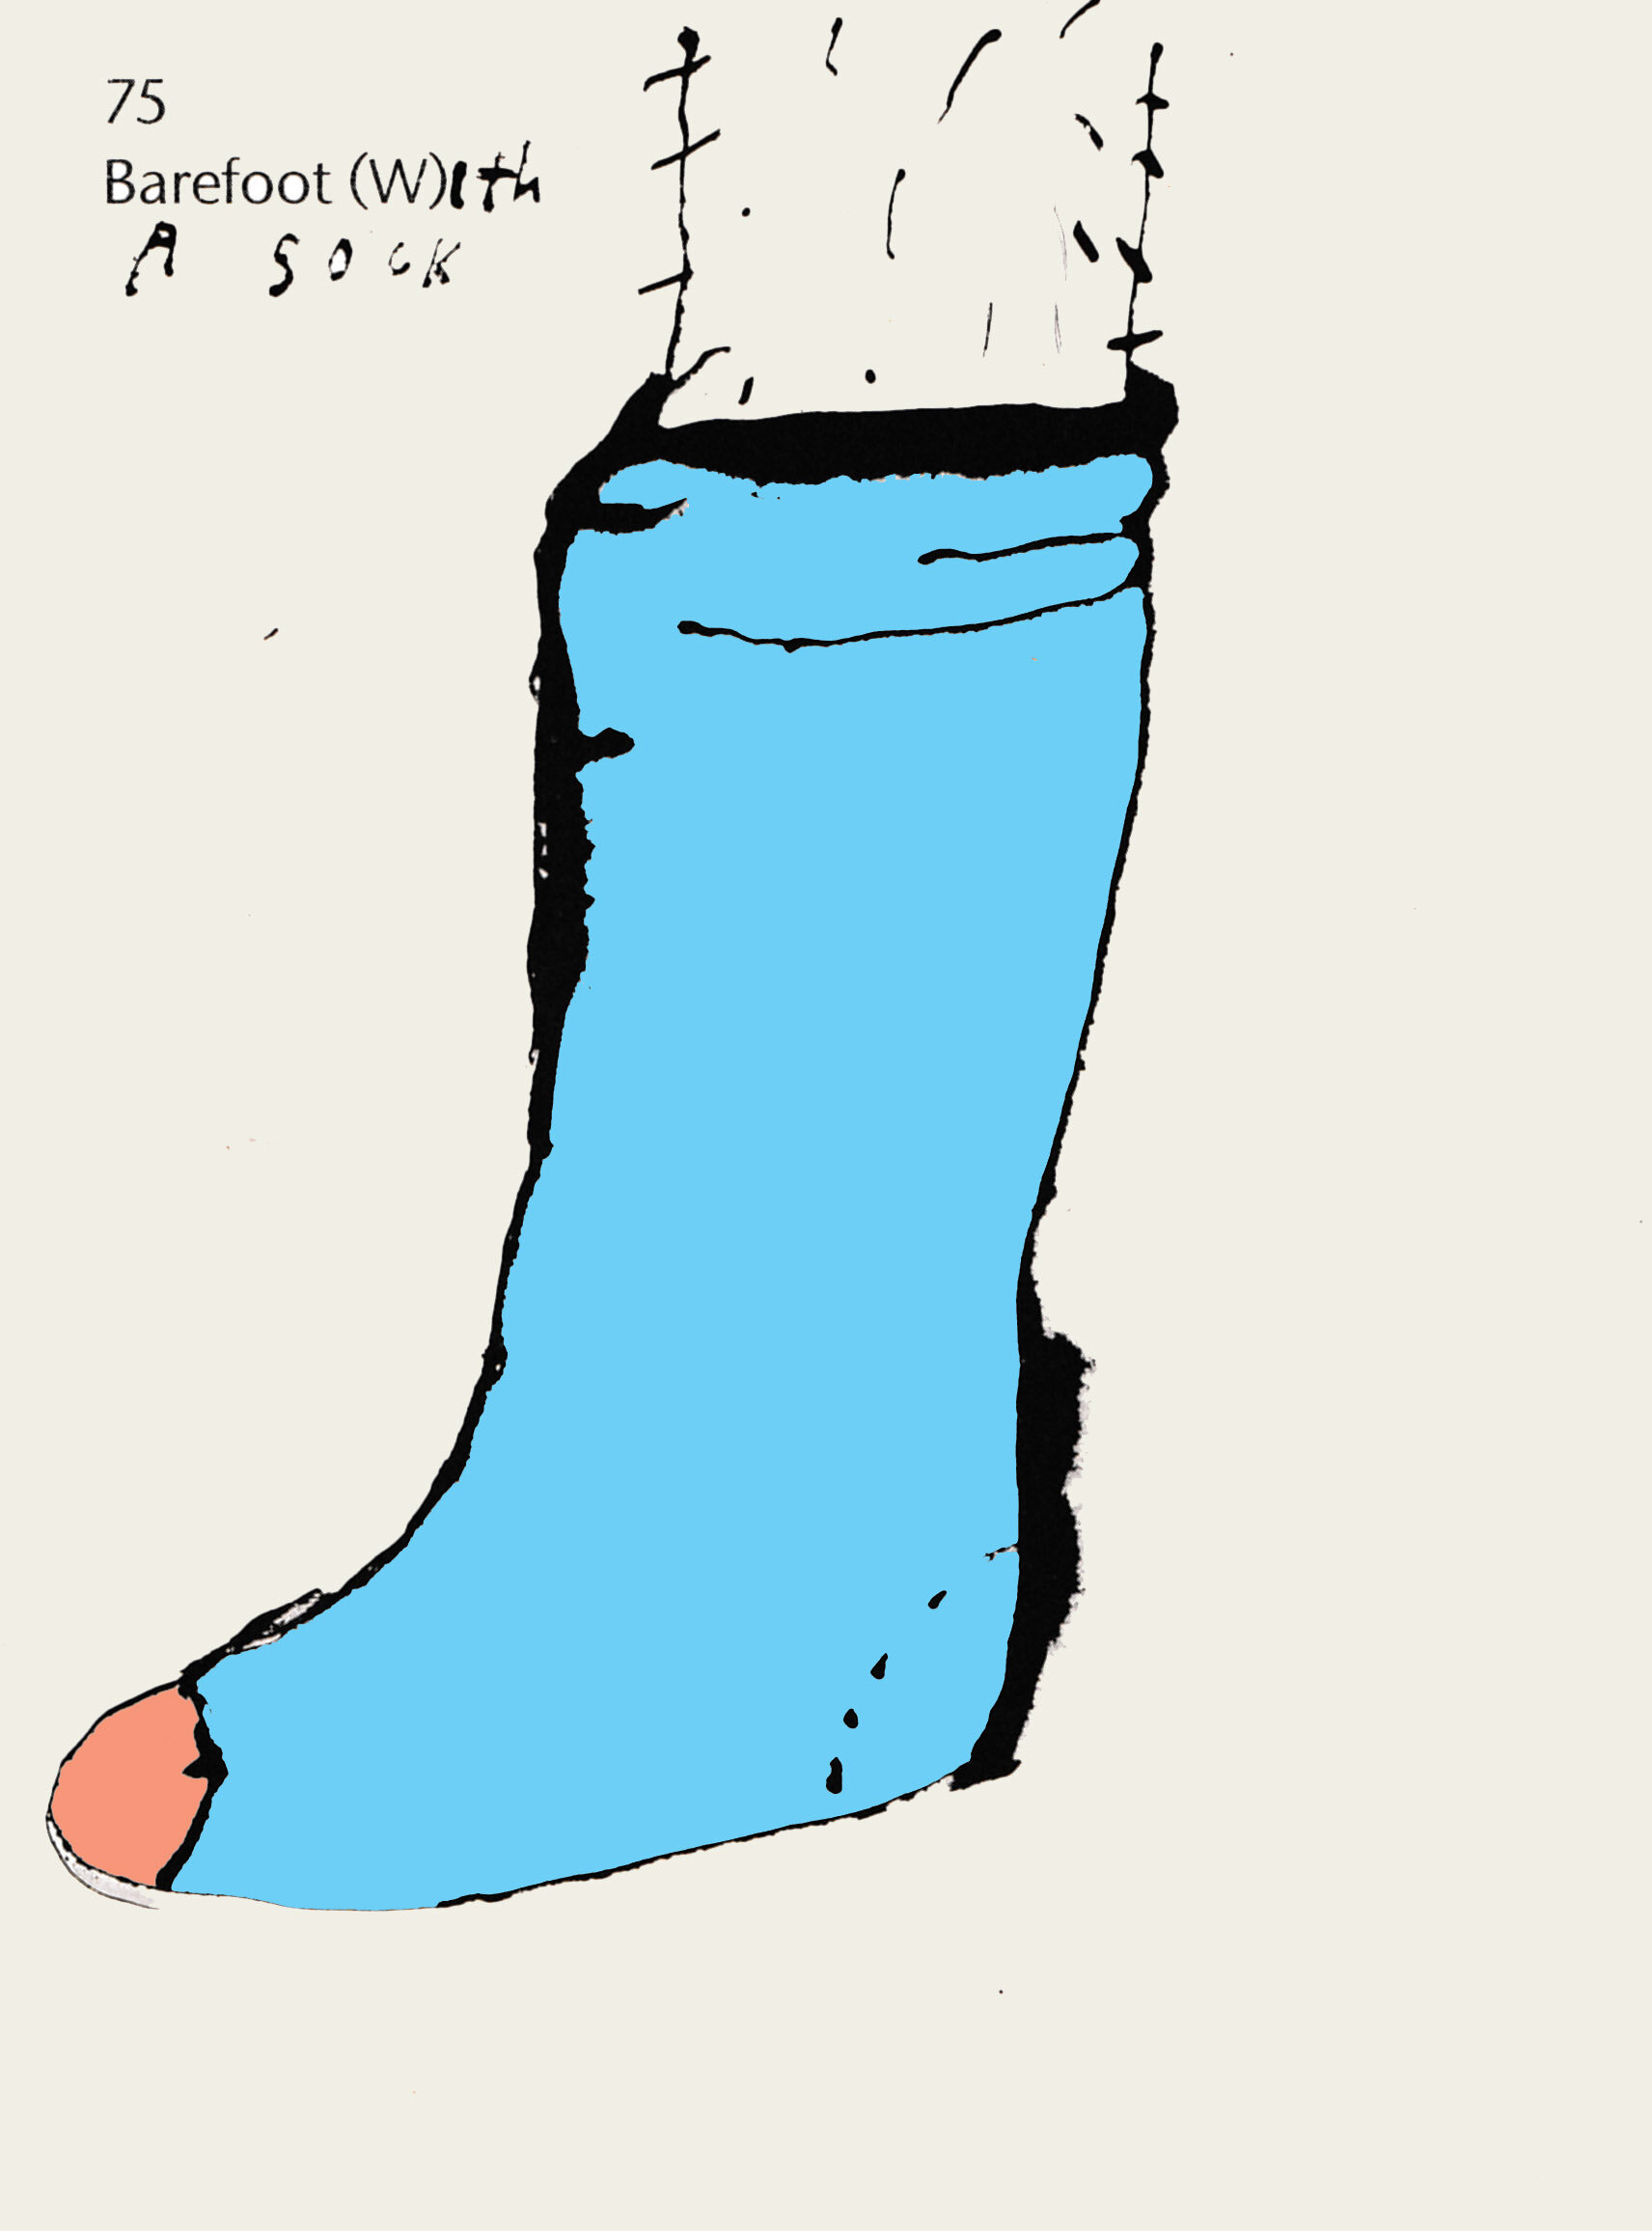 barefoot with sock.jpg